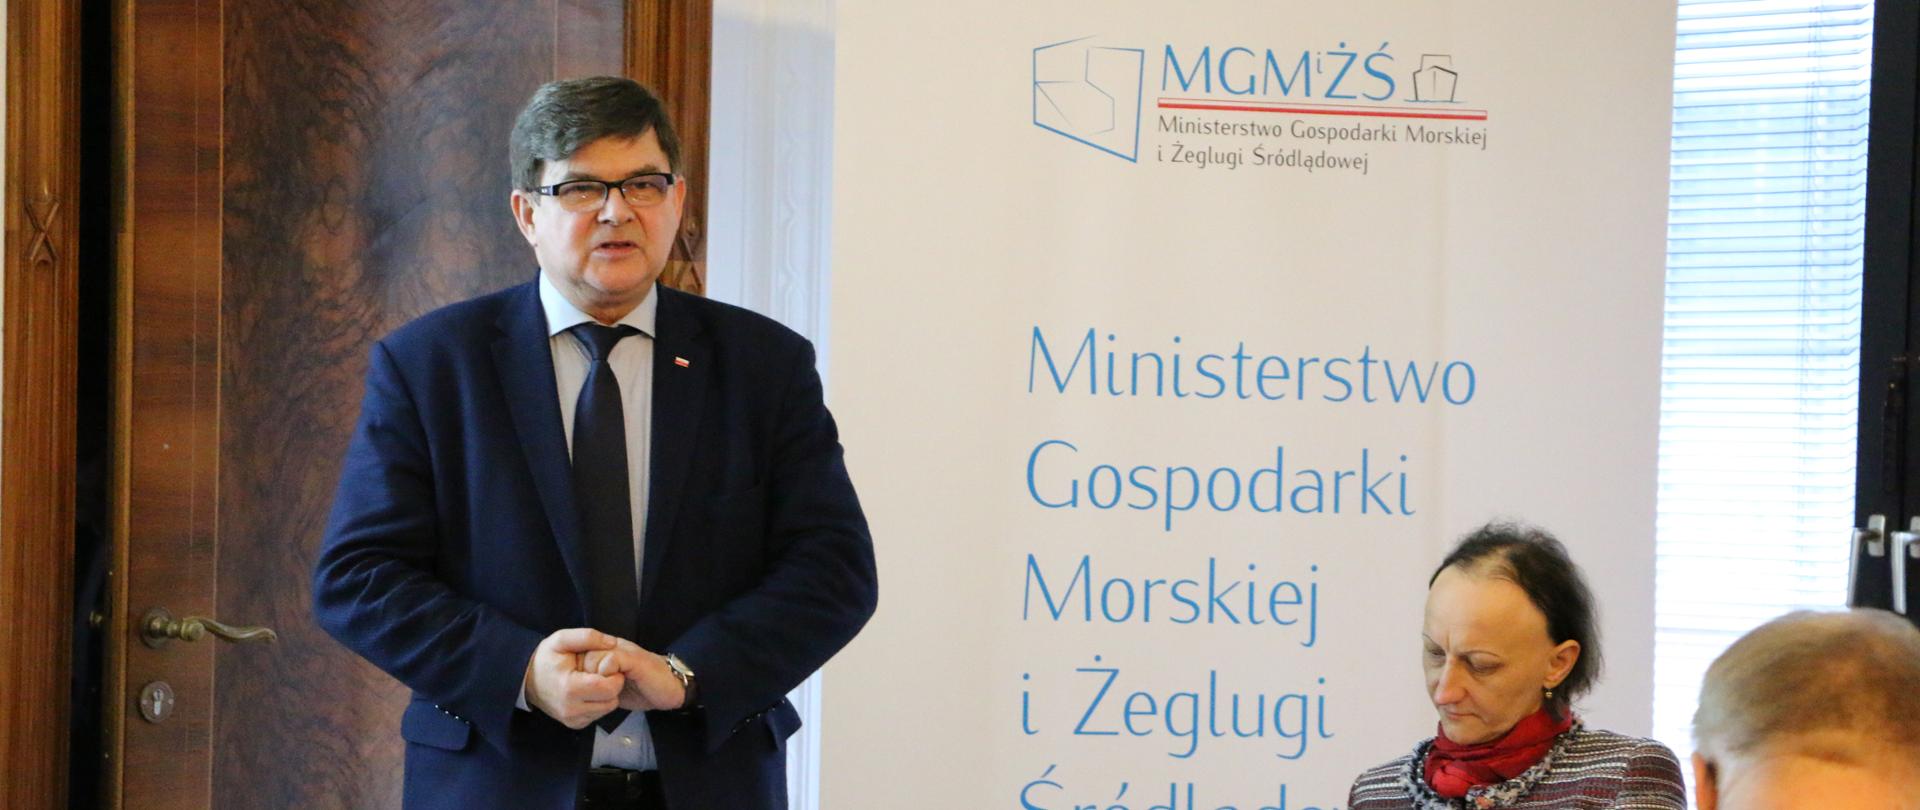 Minister Jerzy Materna